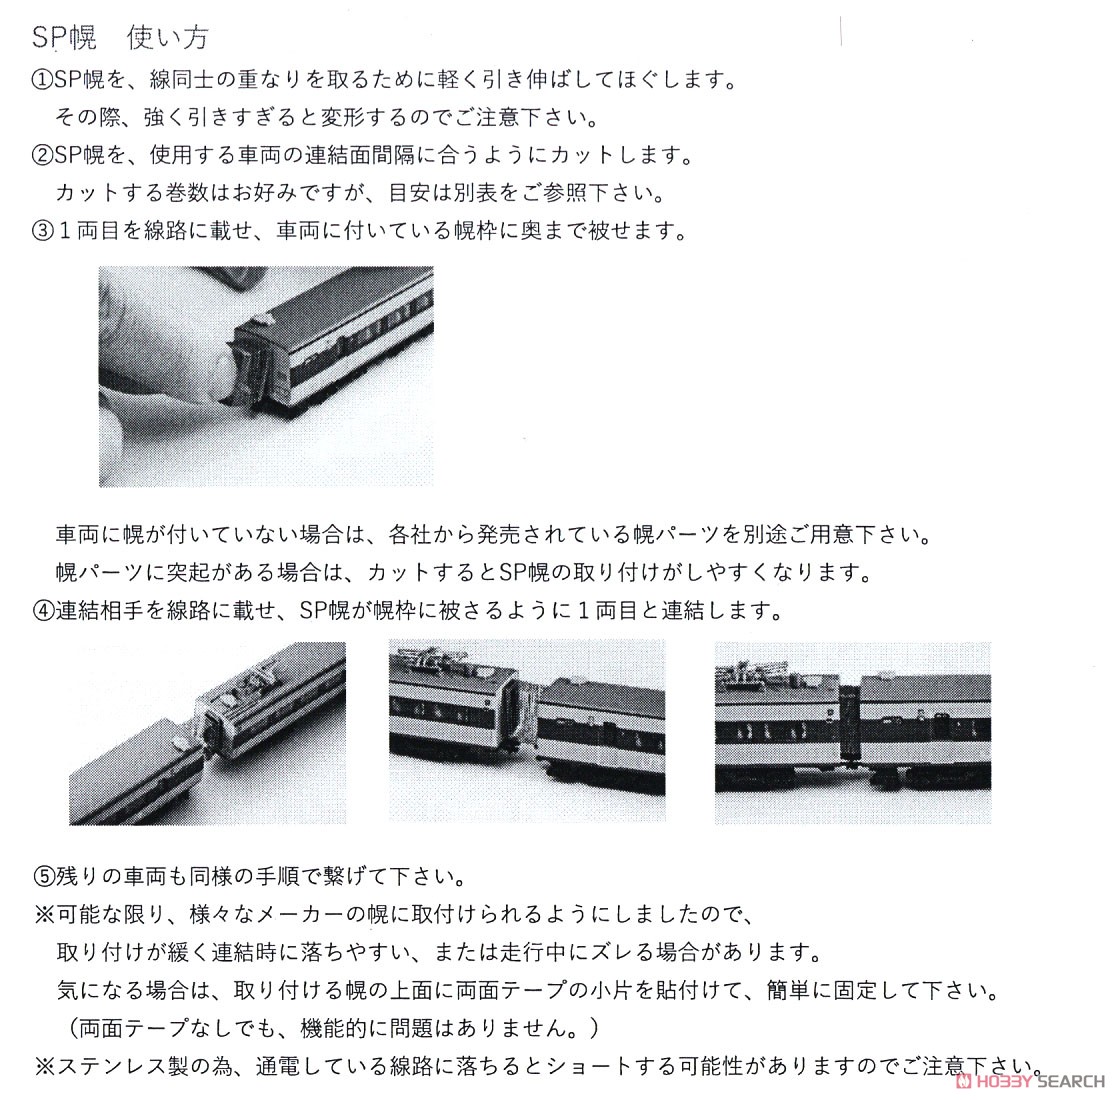 SP幌 Sサイズ (6.3×14.1mm) (カラー/ブラウン) (6個入) (鉄道模型) 設計図3